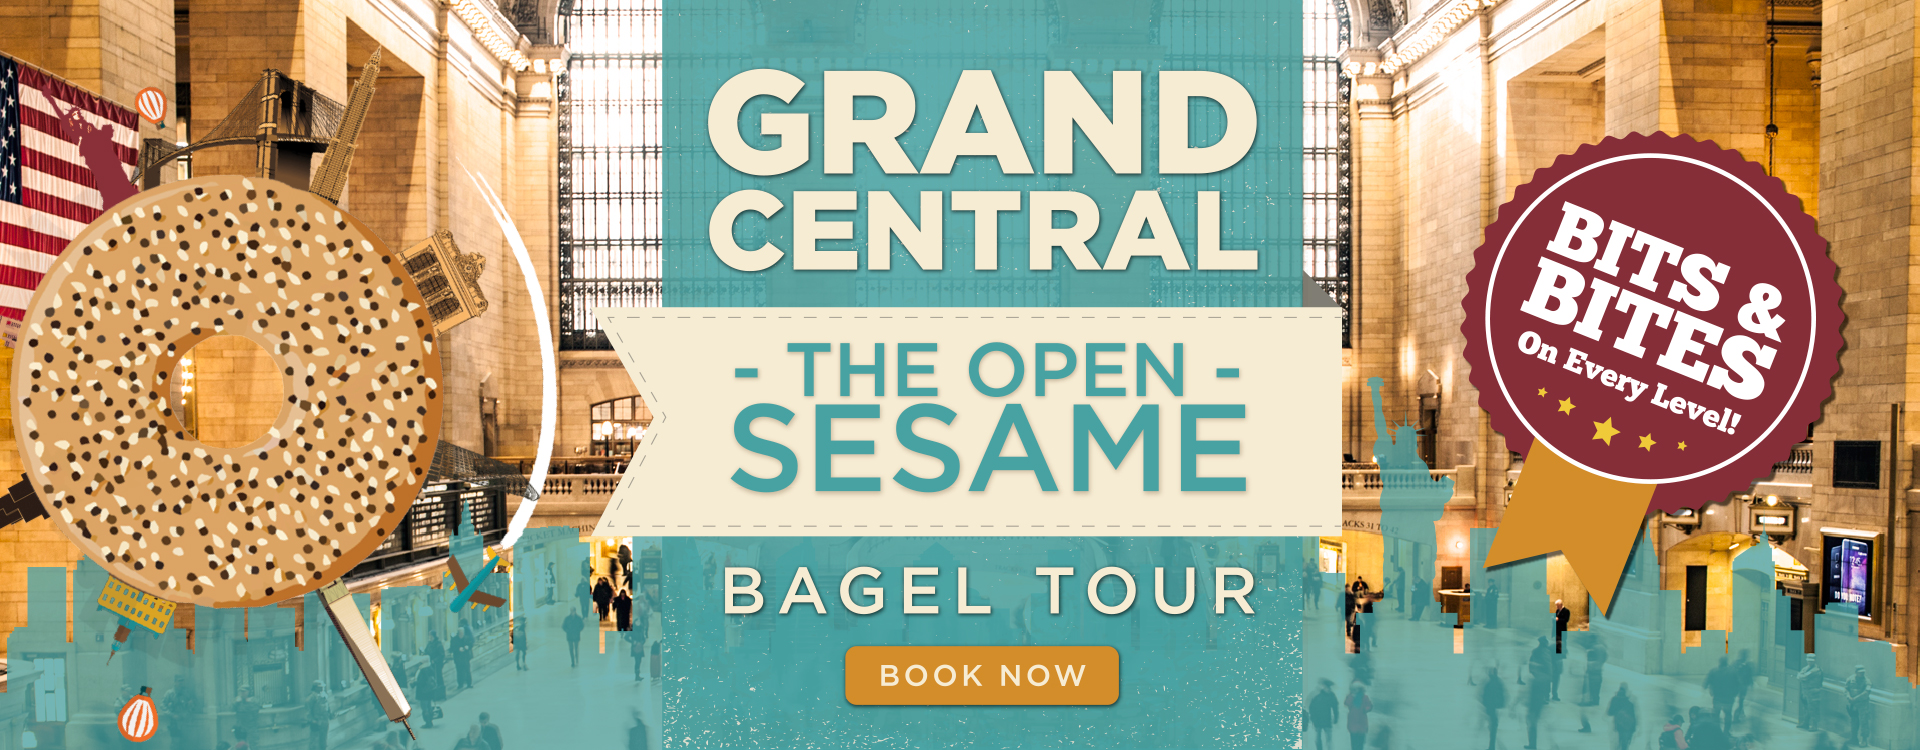 Ben's Bagel Tours Lower East Side Bagel Tour